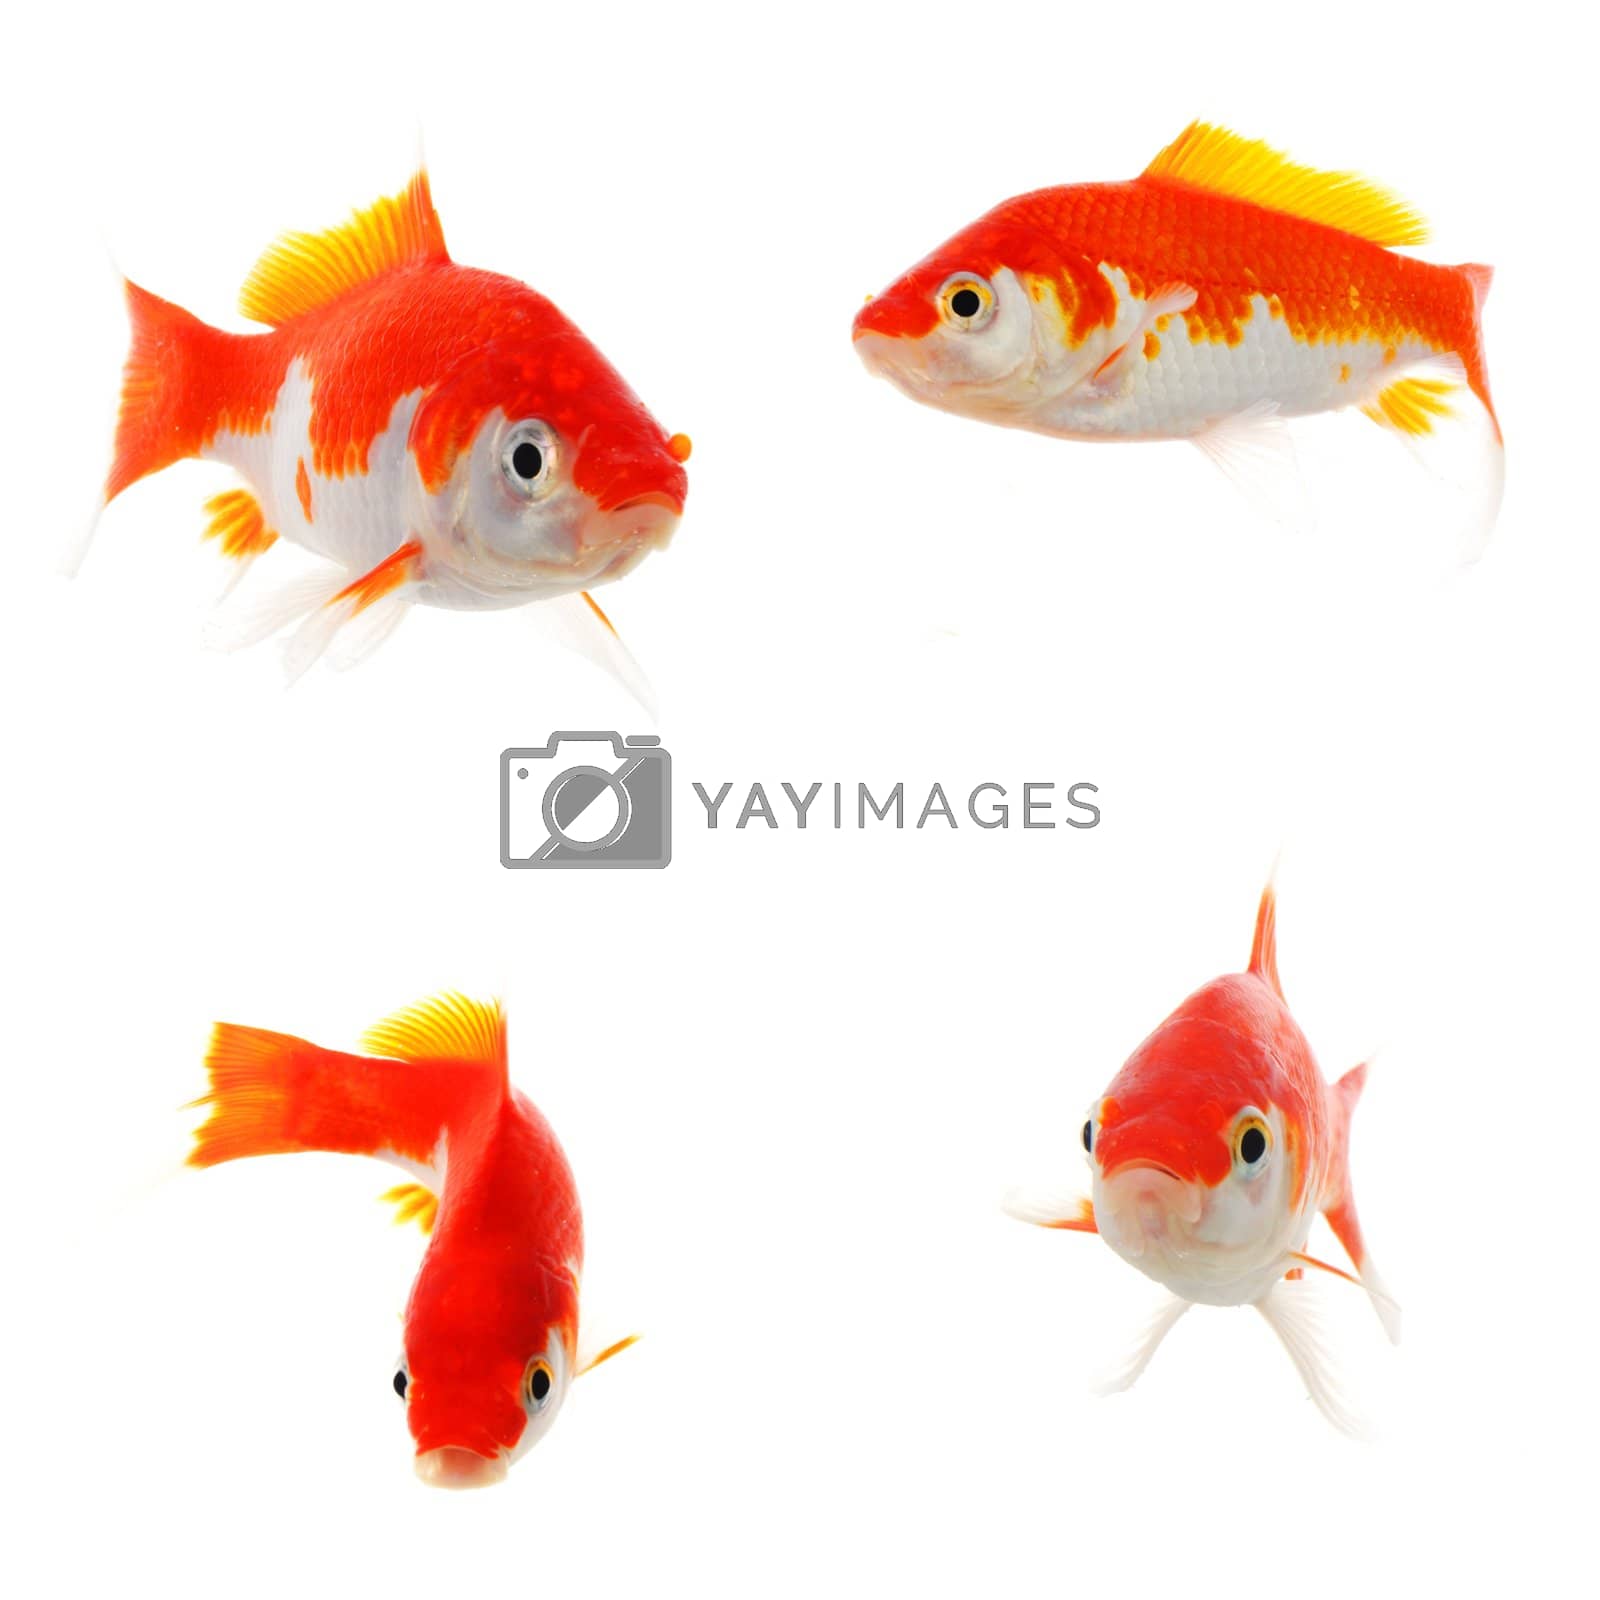 Royalty free image of goldfish by gunnar3000